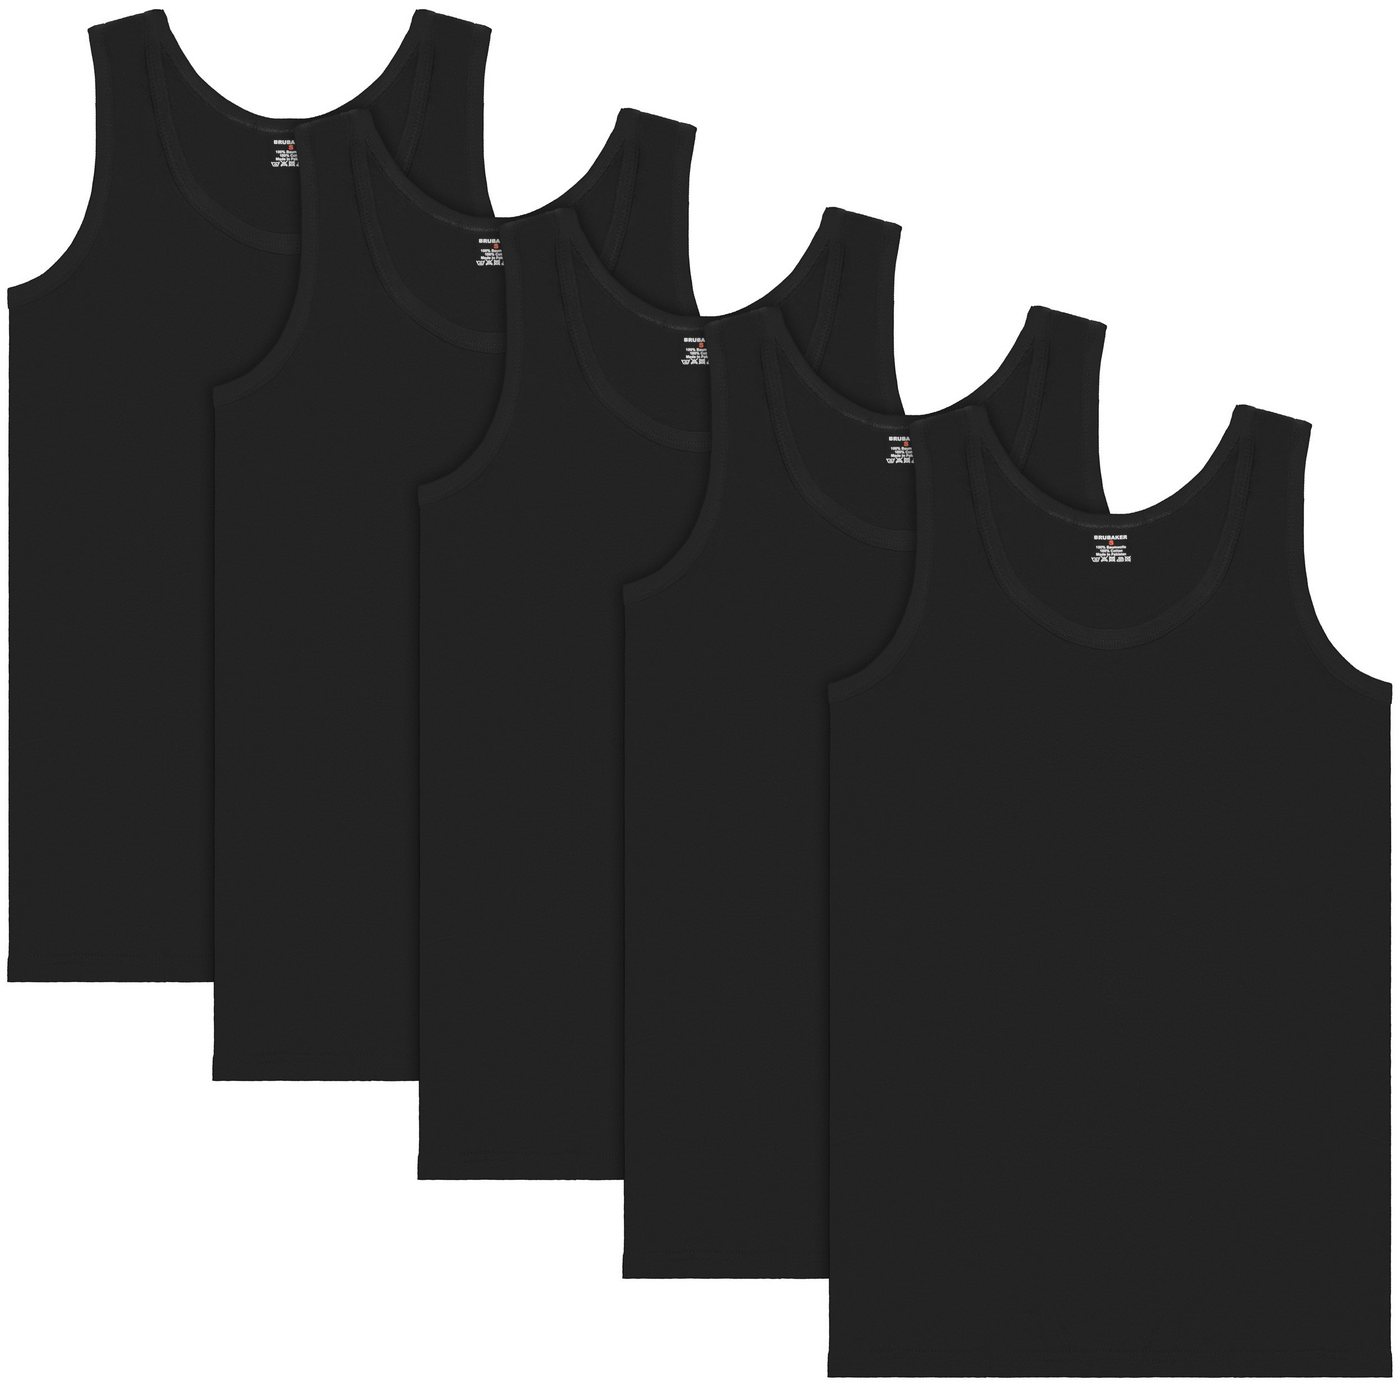 BRUBAKER Tanktop Classic Herren Unterhemd Tank Top (5er-Pack) Schlichtes Basic Achselshirt aus hochwertiger Baumwolle (glatt), Extra Lang, Nahtlos von BRUBAKER